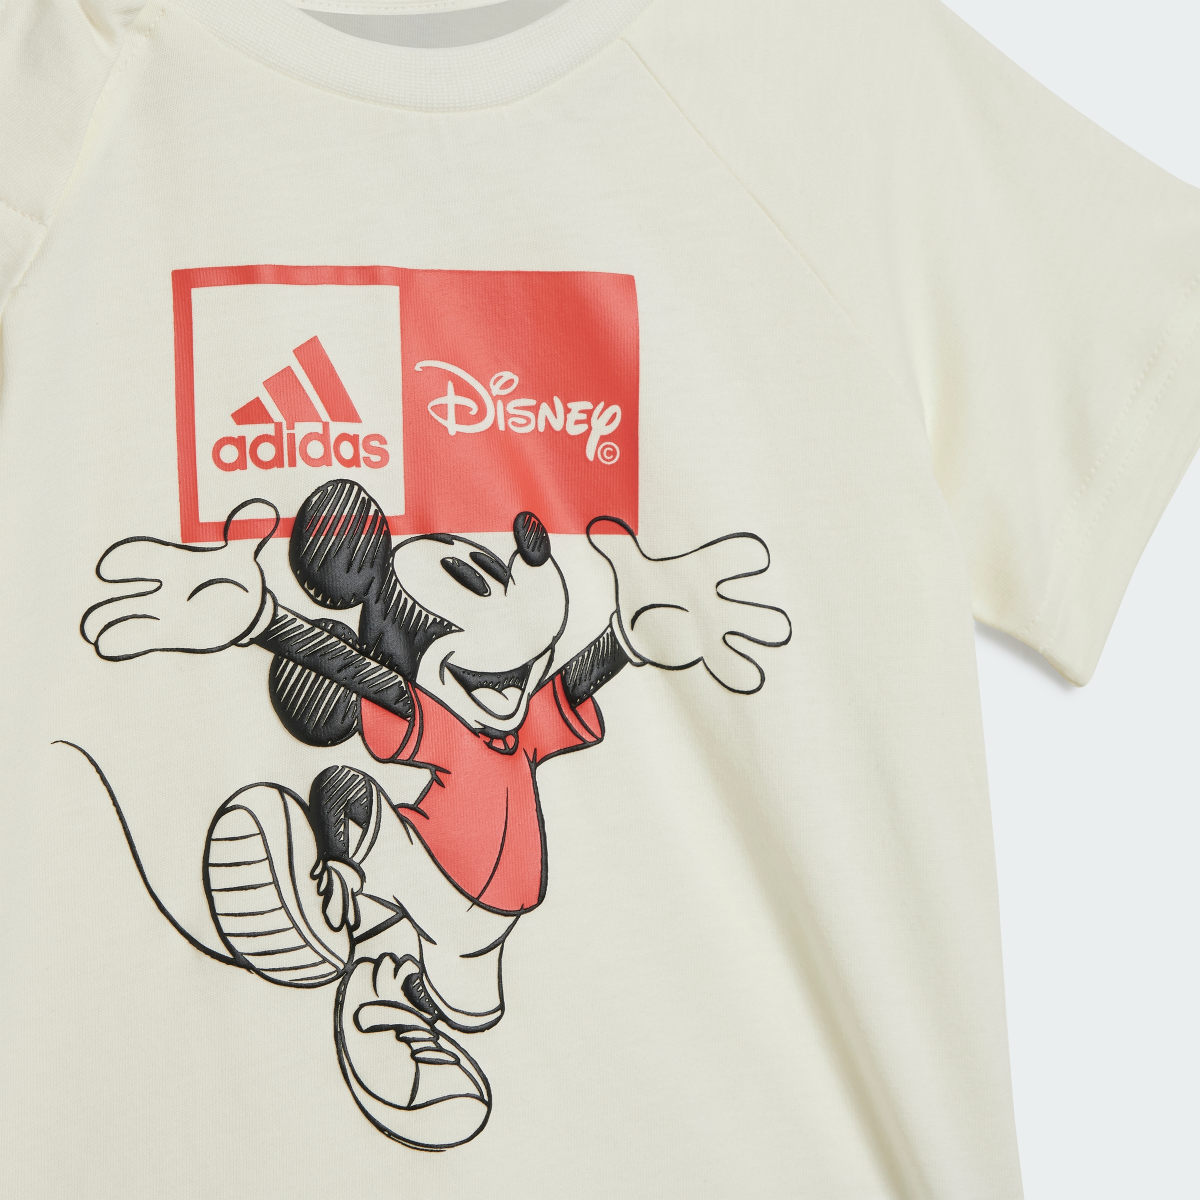 Adidas Zestaw adidas x Disney Mickey Mouse Gift. 9